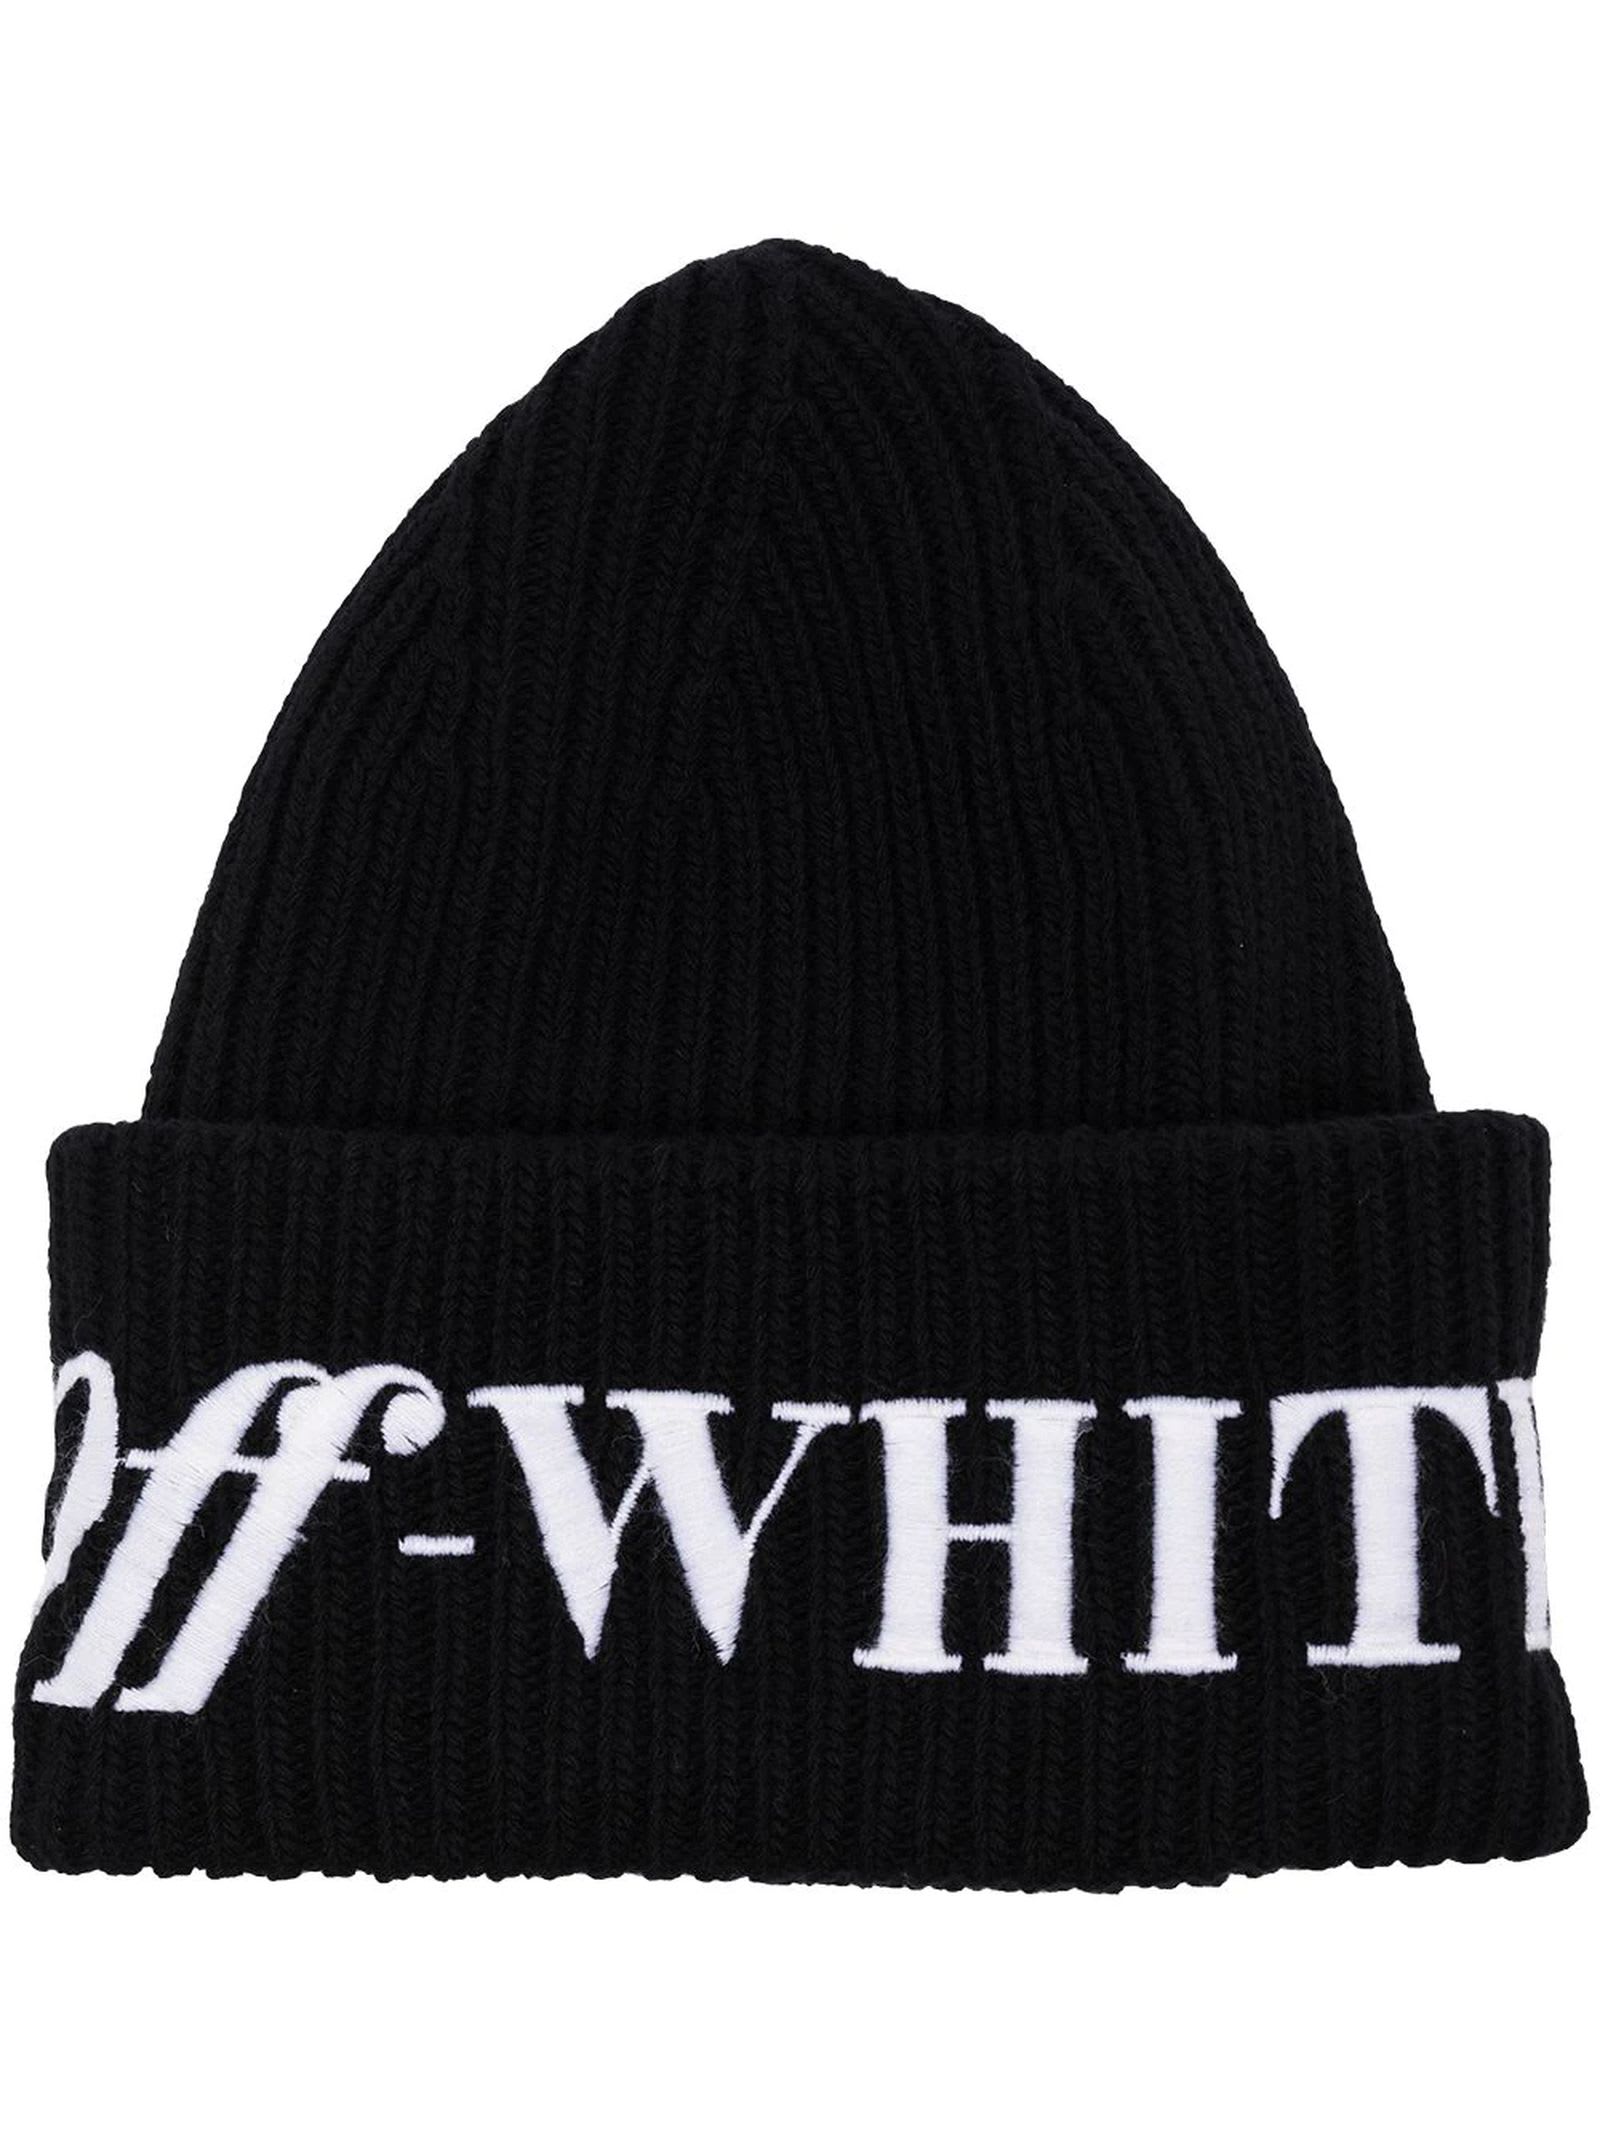 Off-White Black Wool Beanie